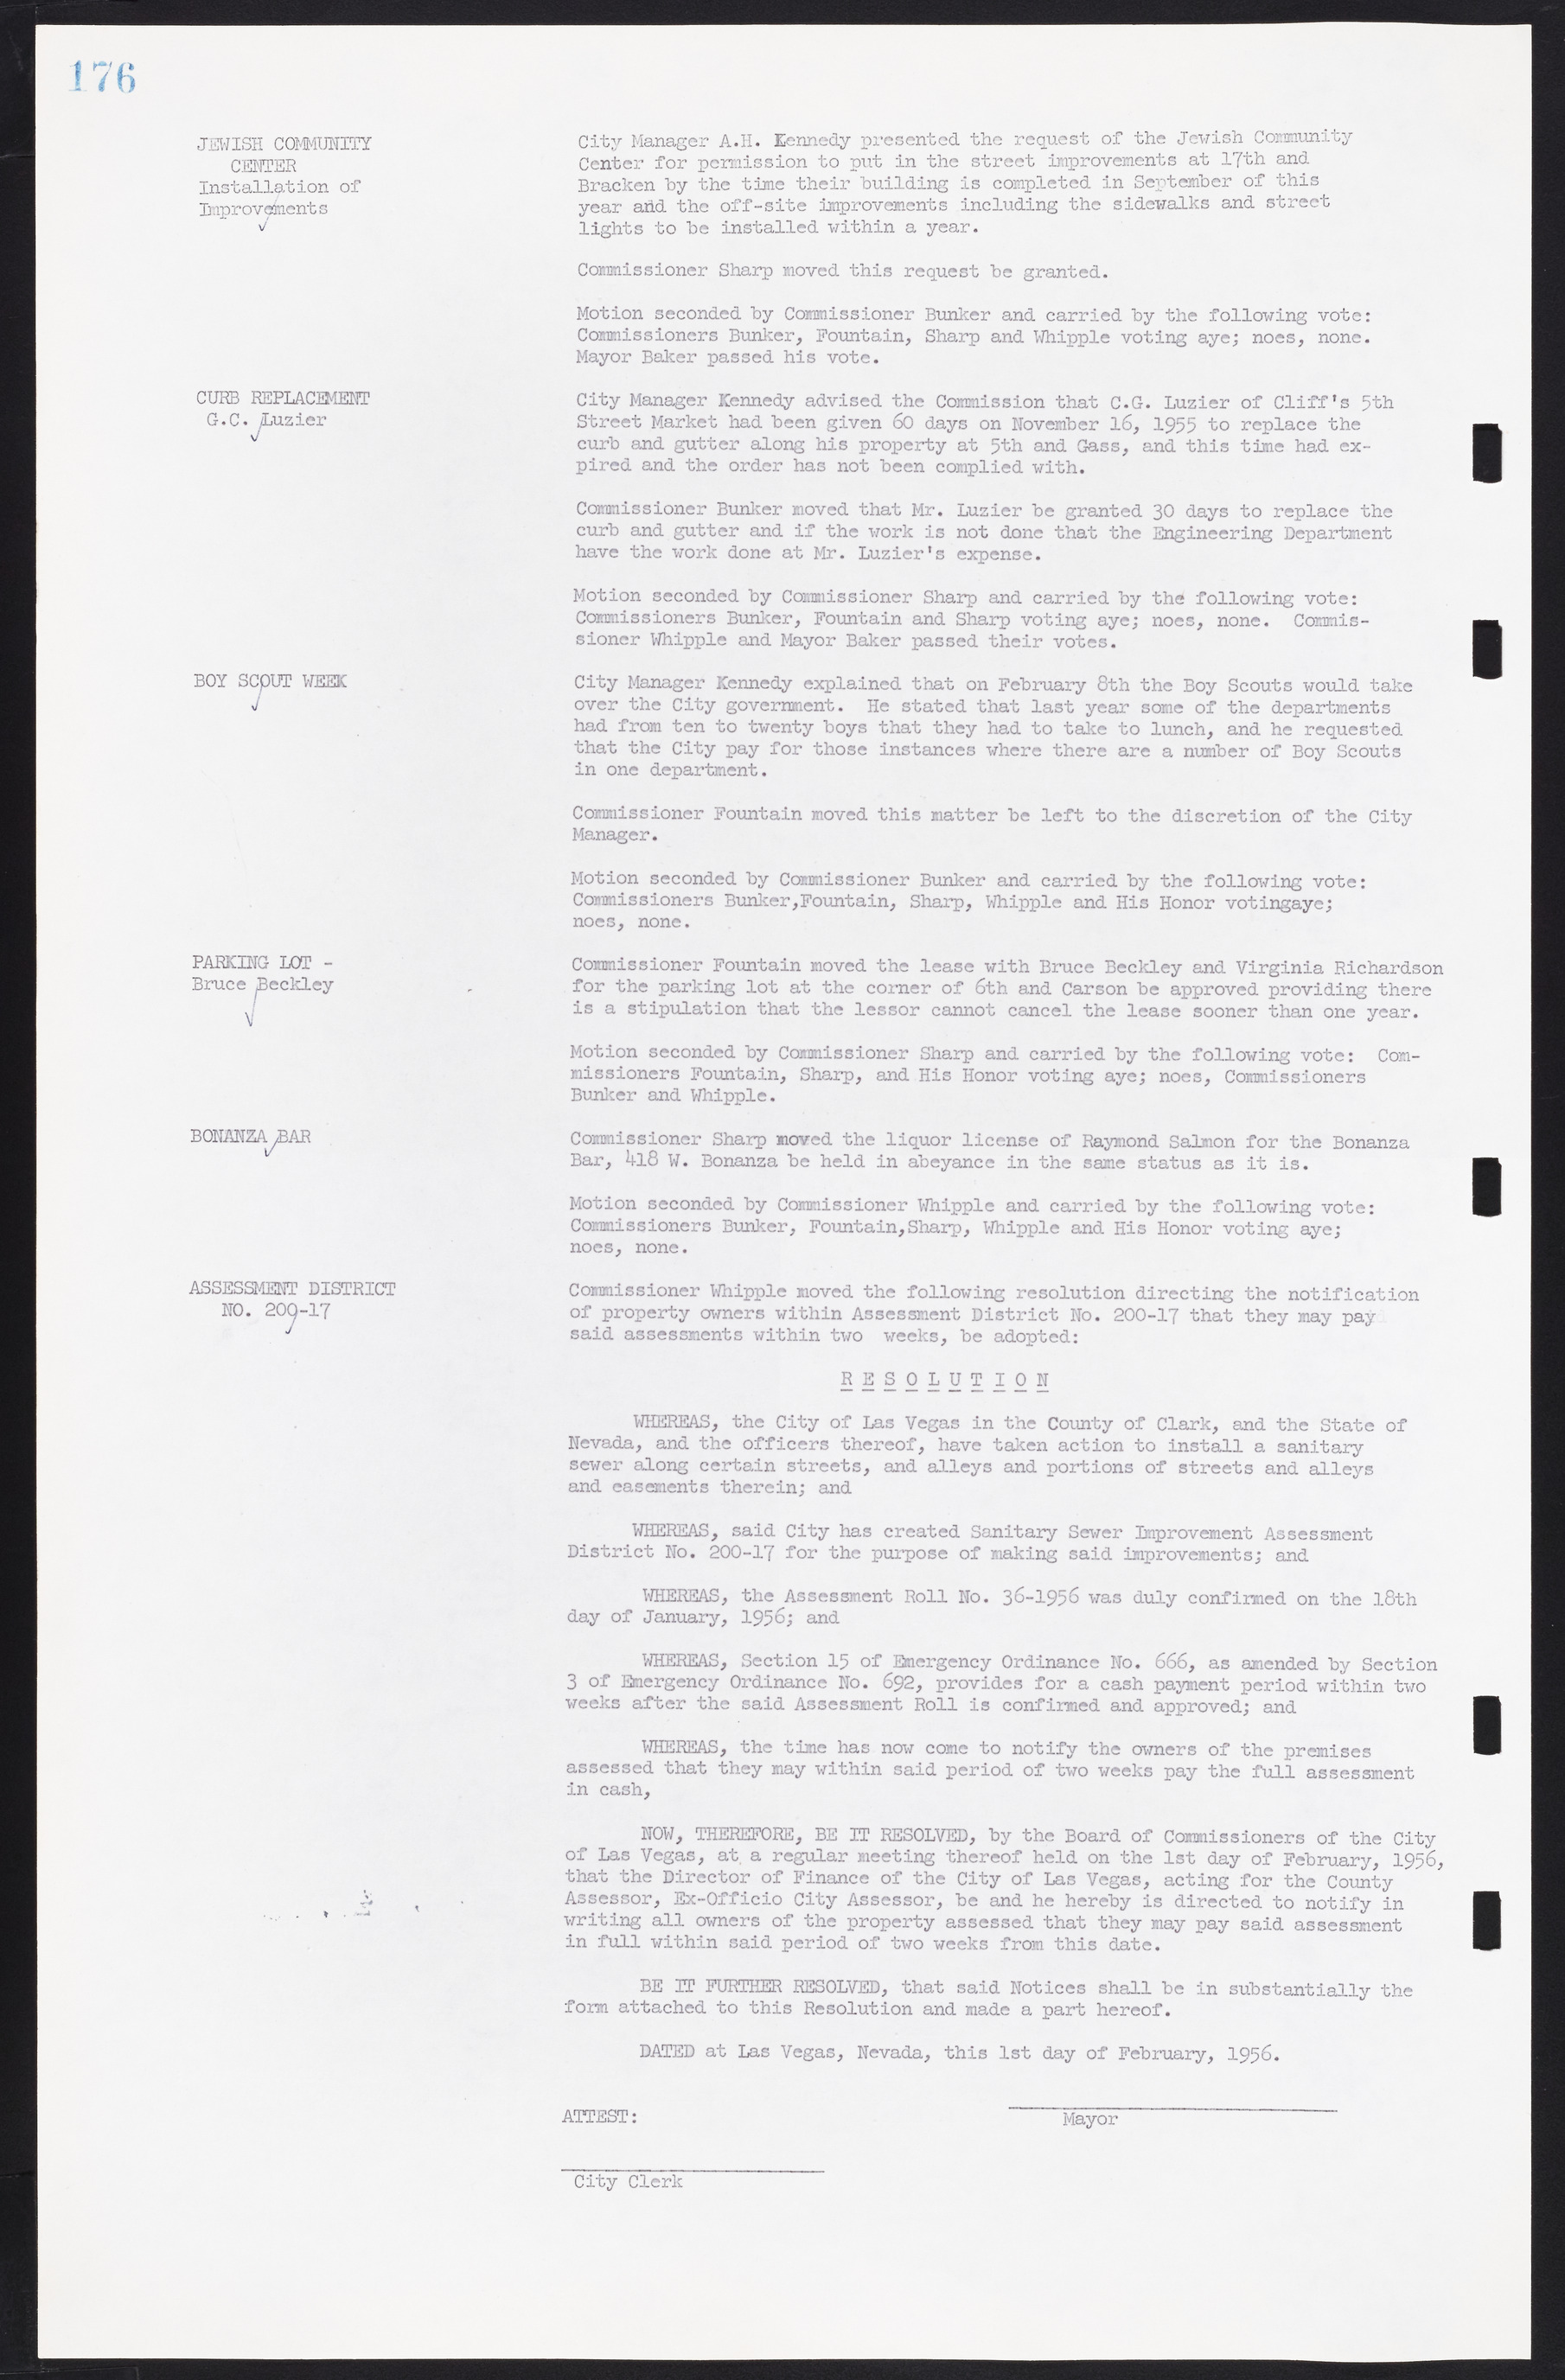 Las Vegas City Commission Minutes, September 21, 1955 to November 20, 1957, lvc000010-192